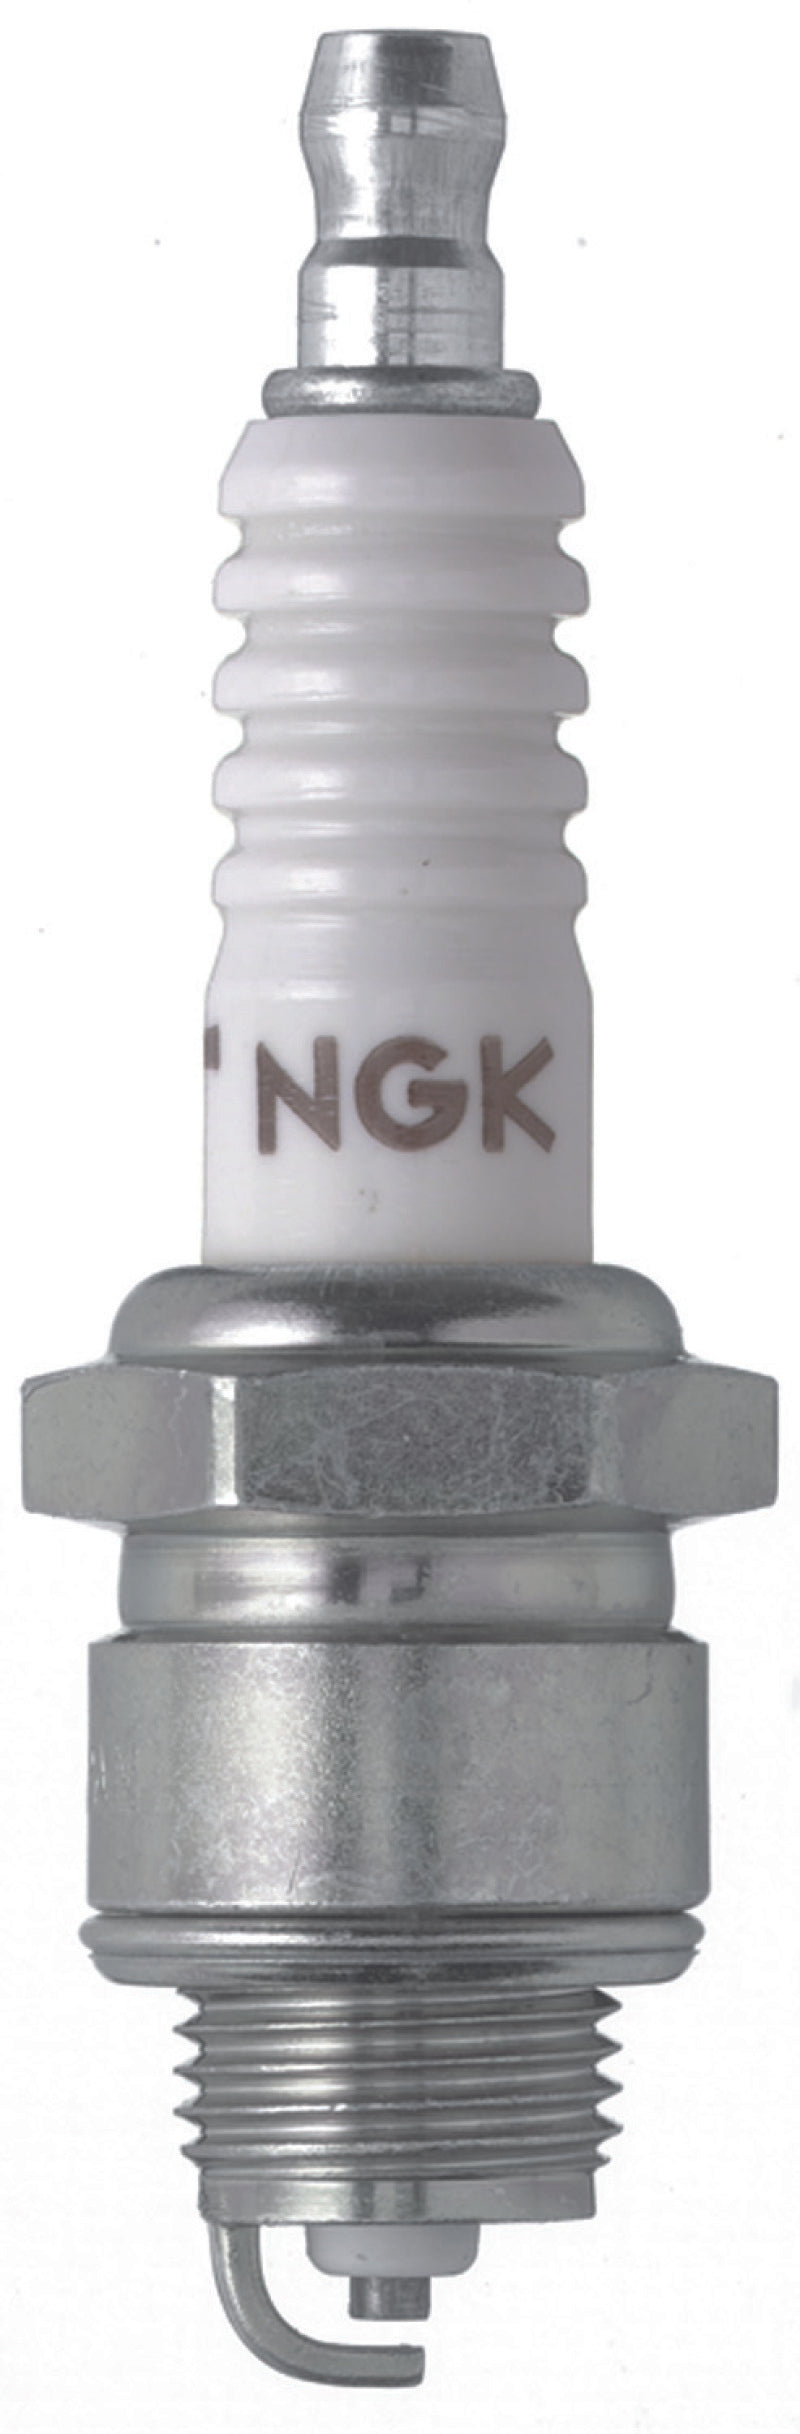 NGK Racing Spark Plug Box of 4 (R5670-5) -  Shop now at Performance Car Parts